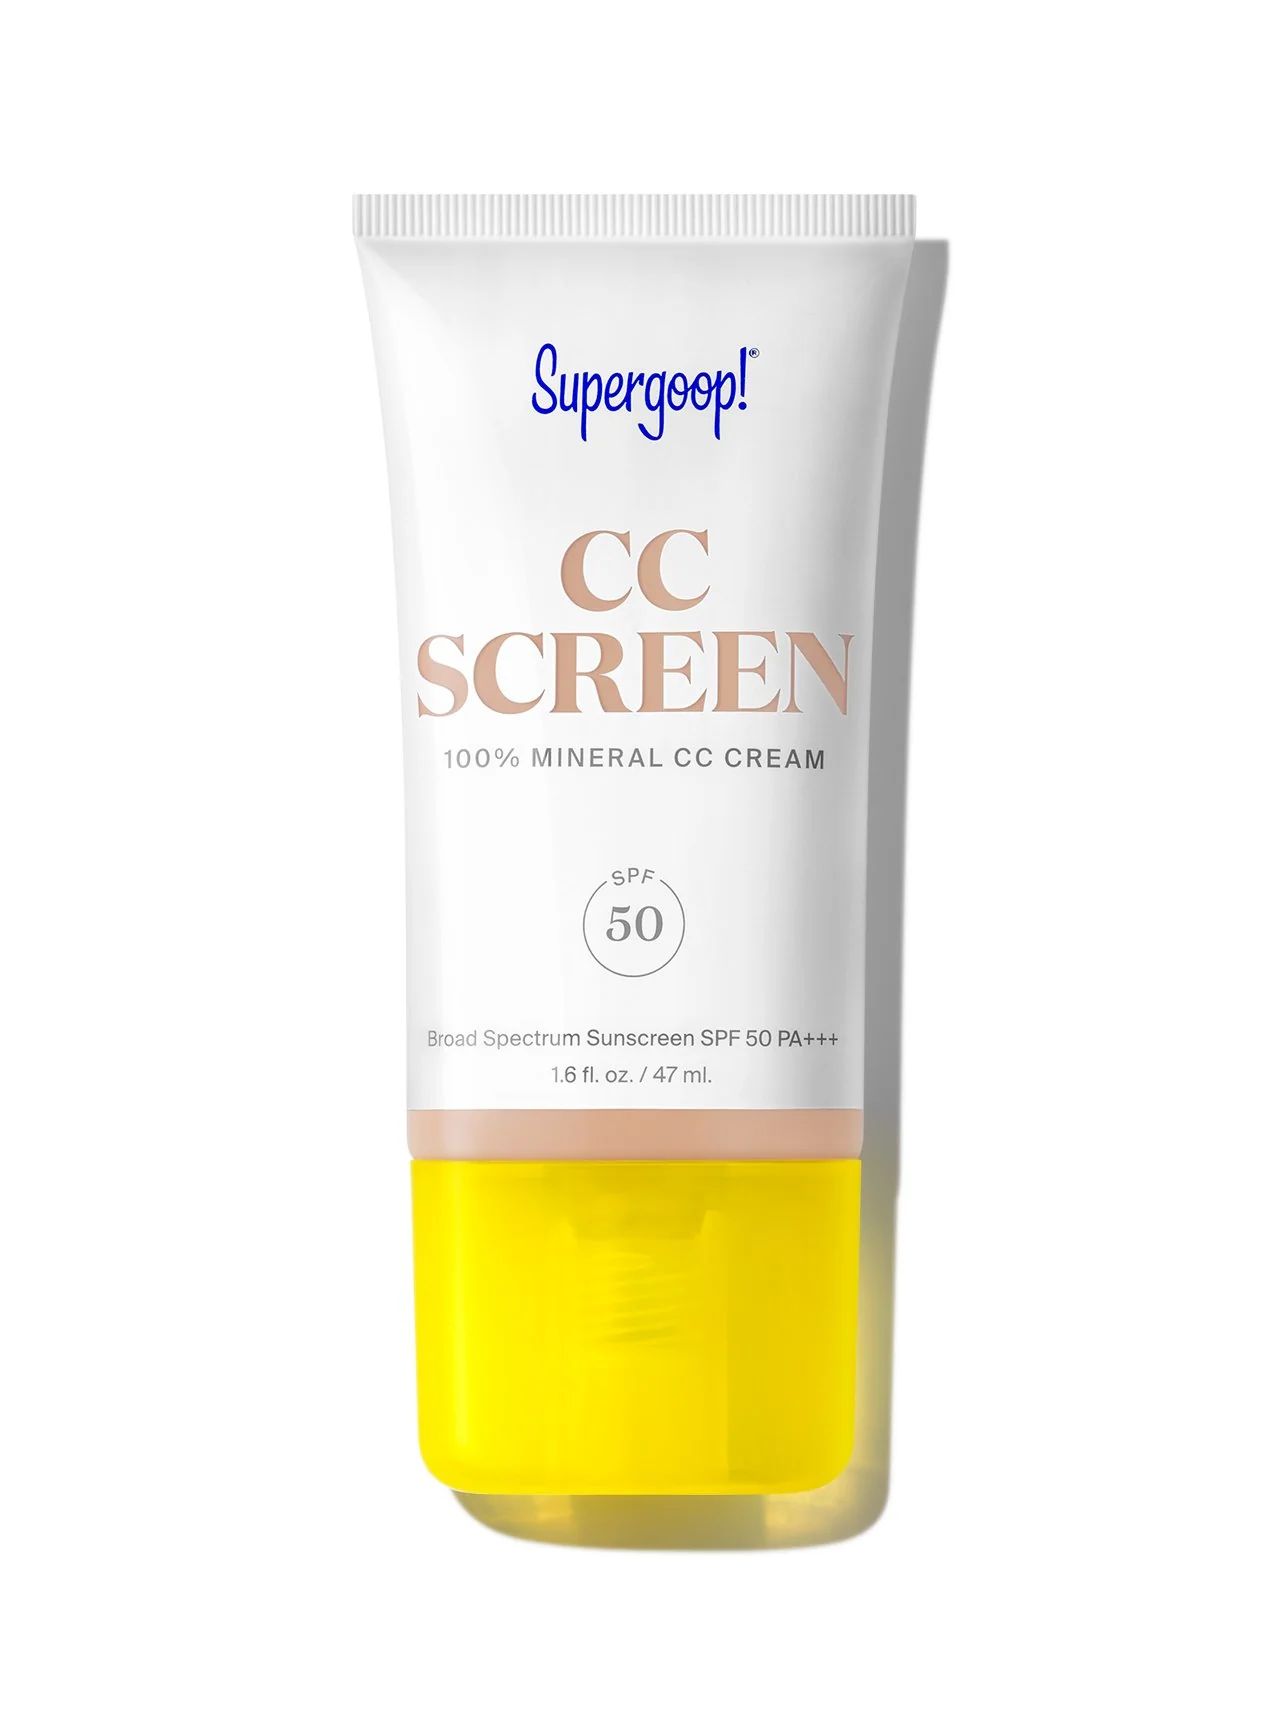 CC Screen 100% Mineral CC Cream SPF 50 | Supergoop